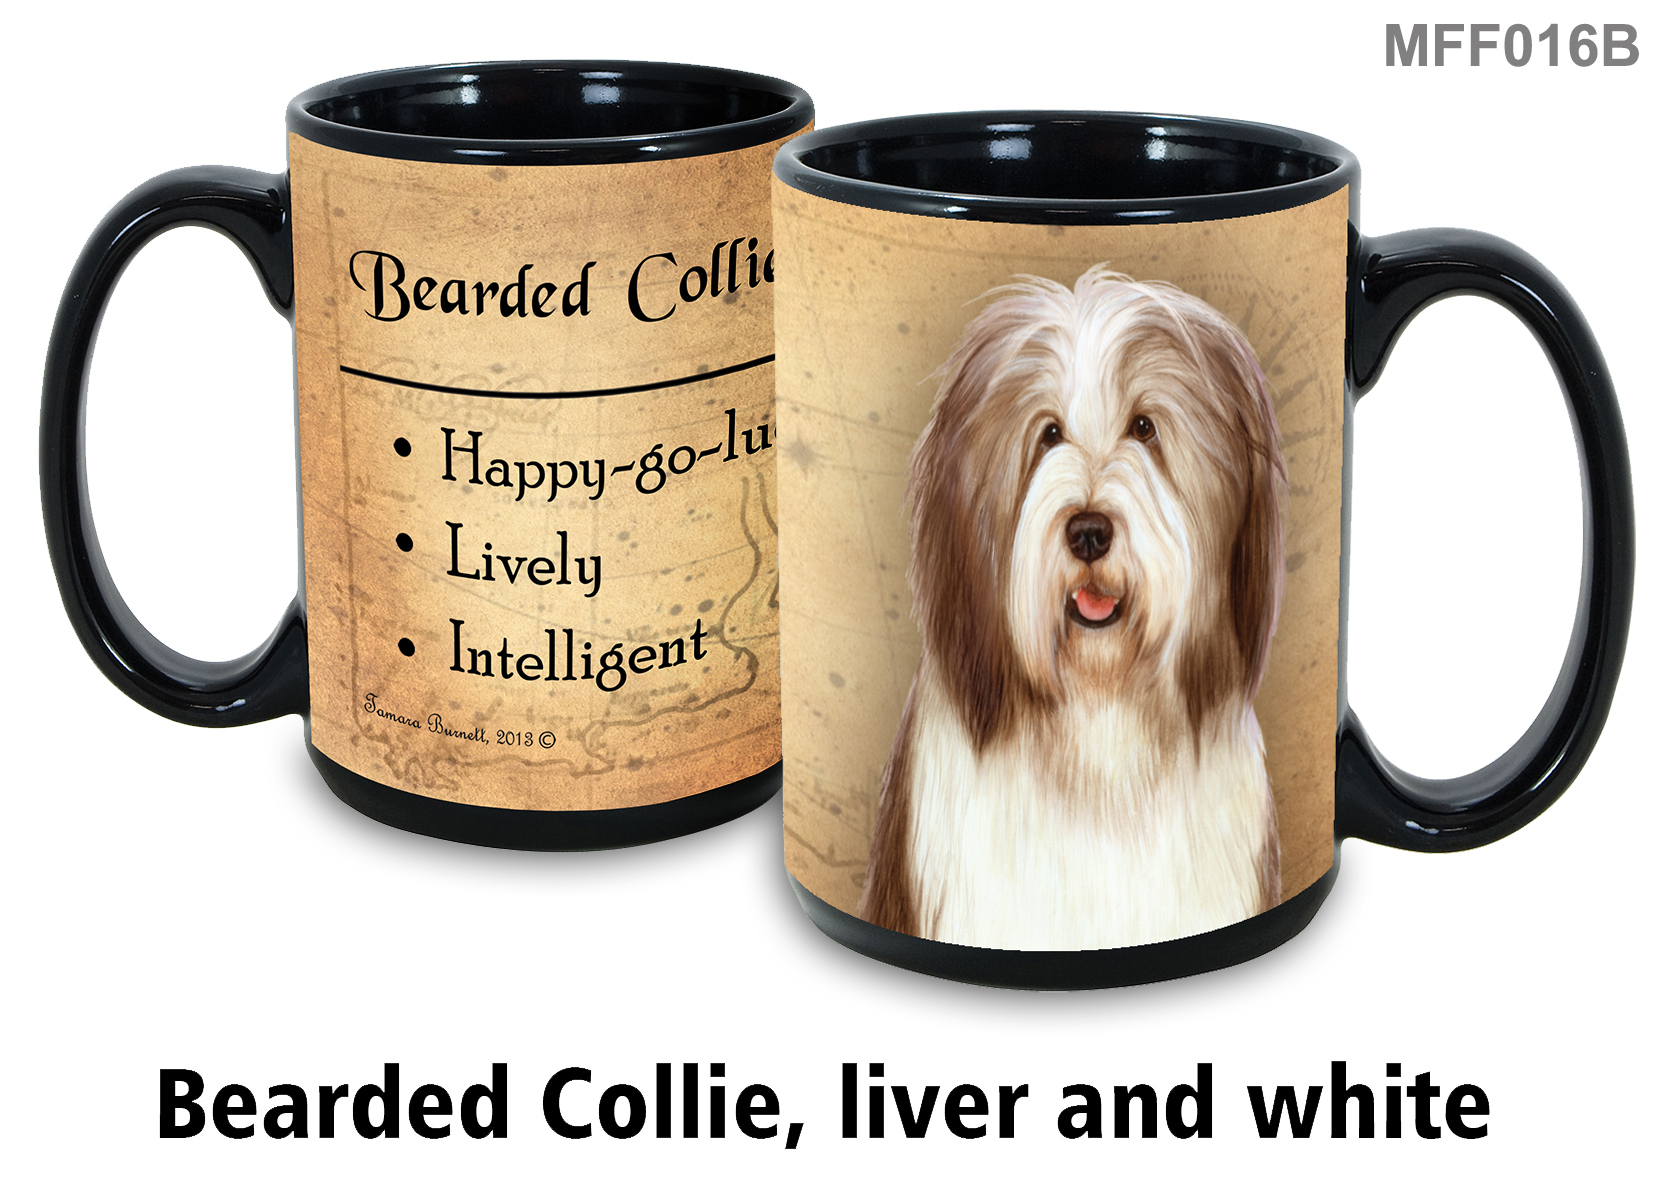 An image of product 20518 Bearded Collie (Dark Liver & White) - My Faithful Friends Mug 15 oz